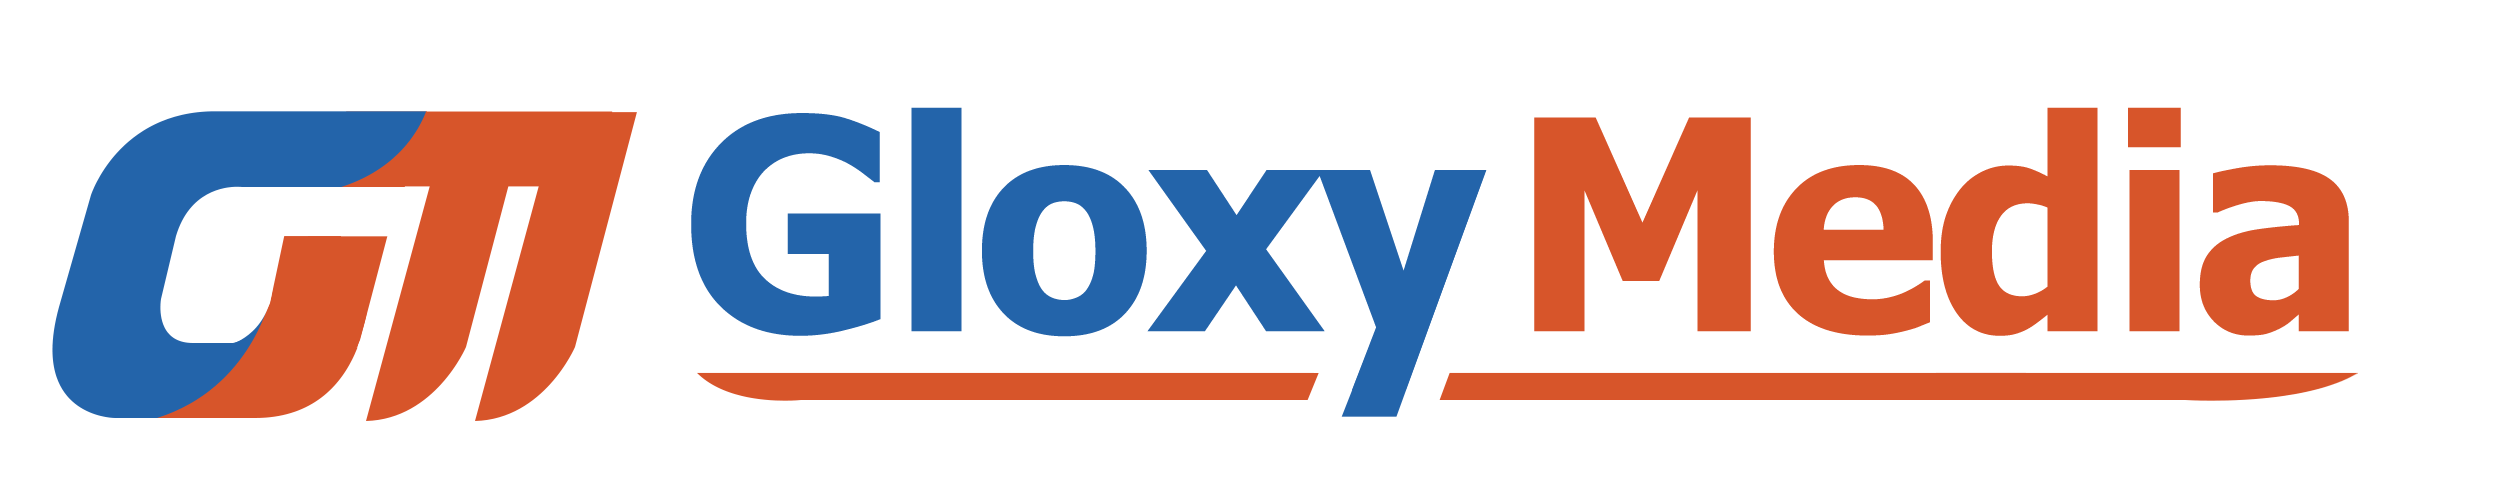 Gloxy Media